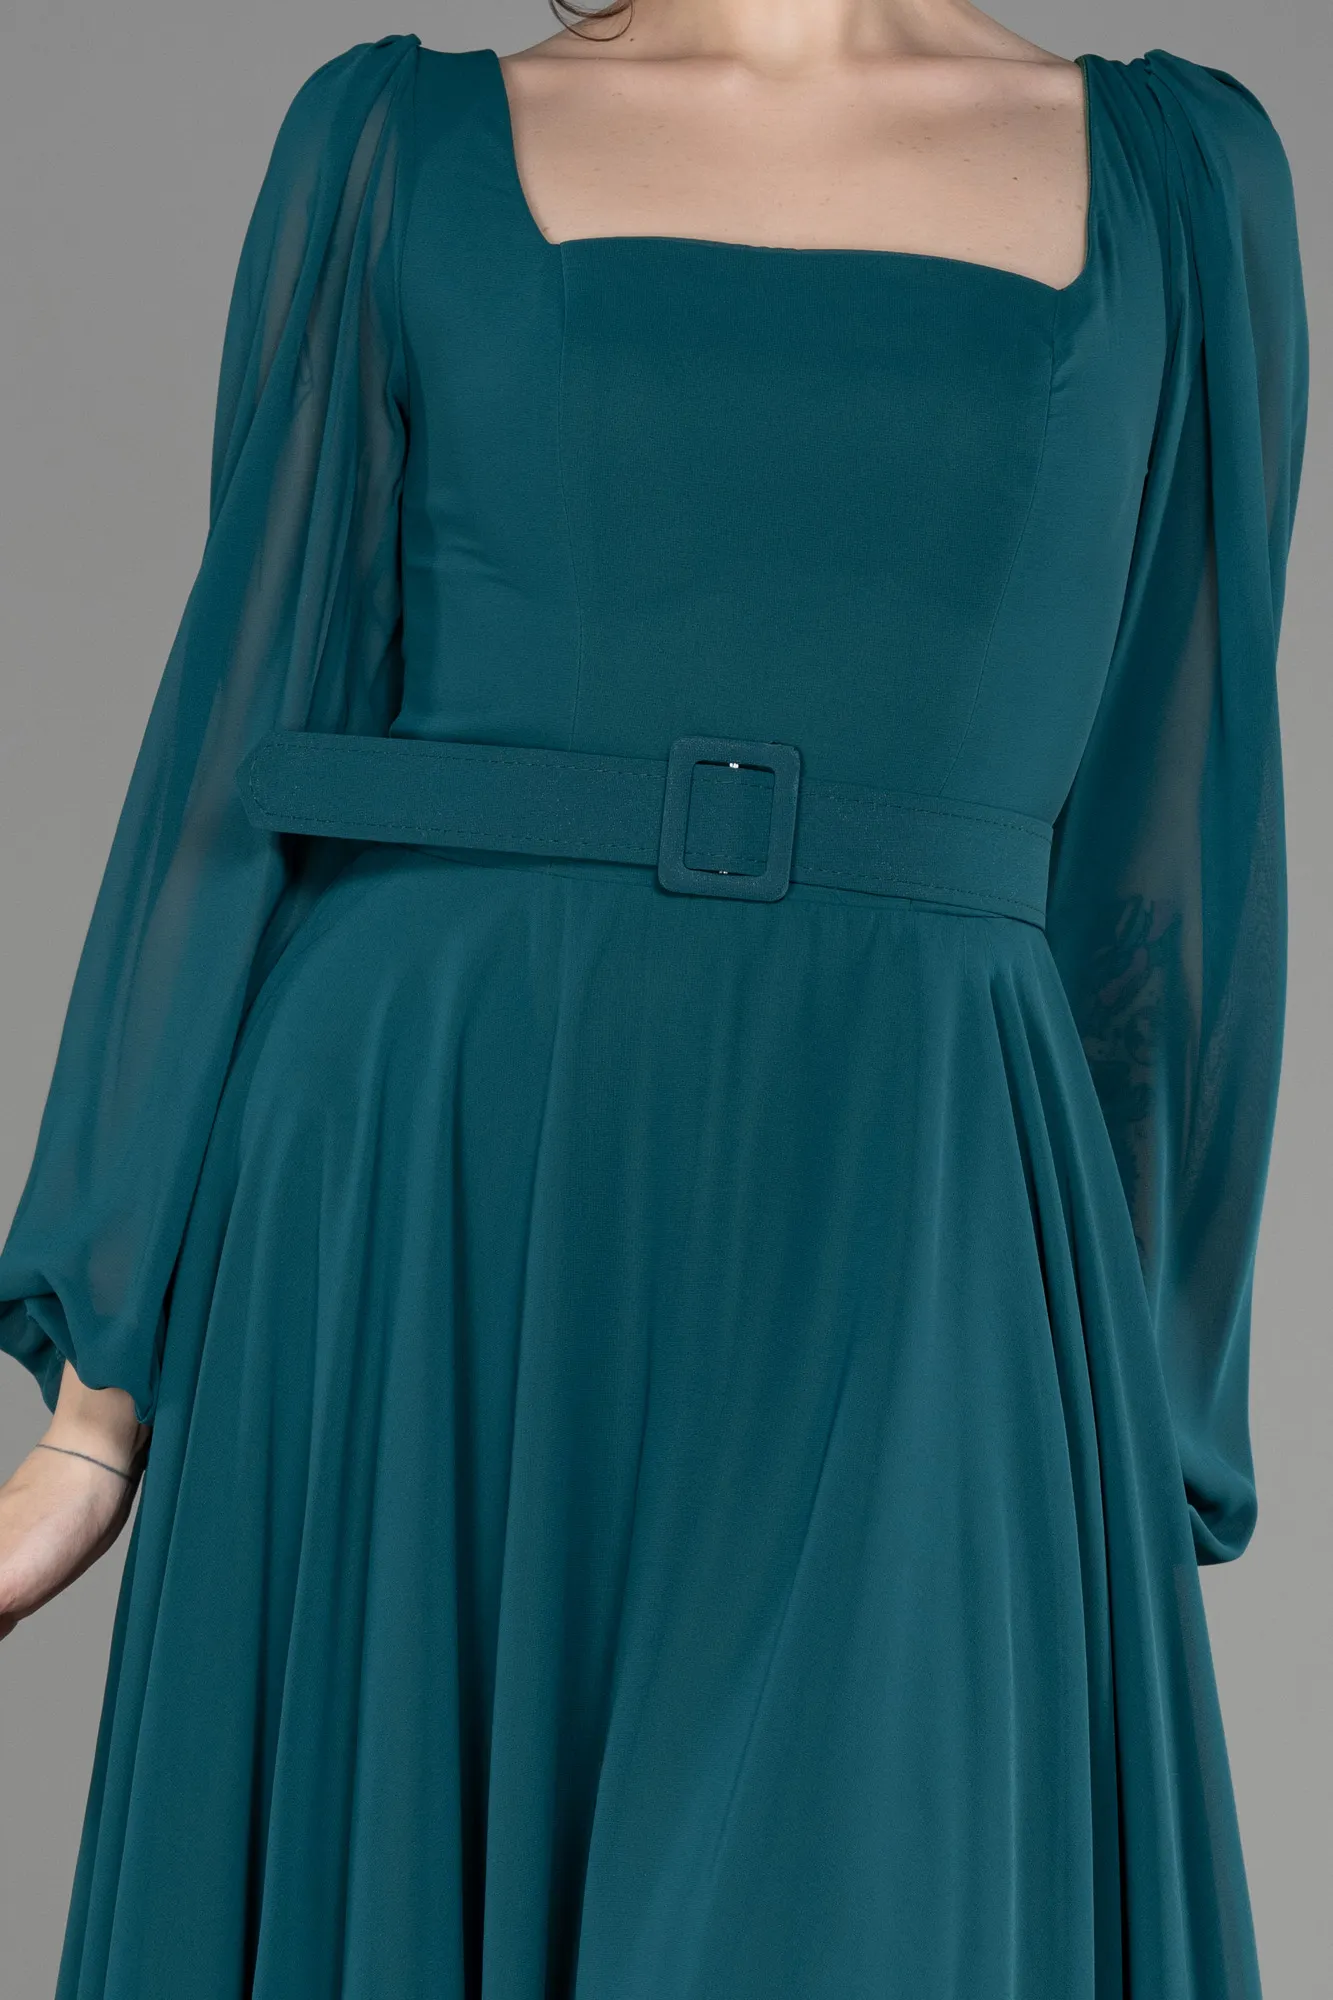 Emerald Green-Long Sleeve Midi Chiffon Cocktail Dress ABK2026